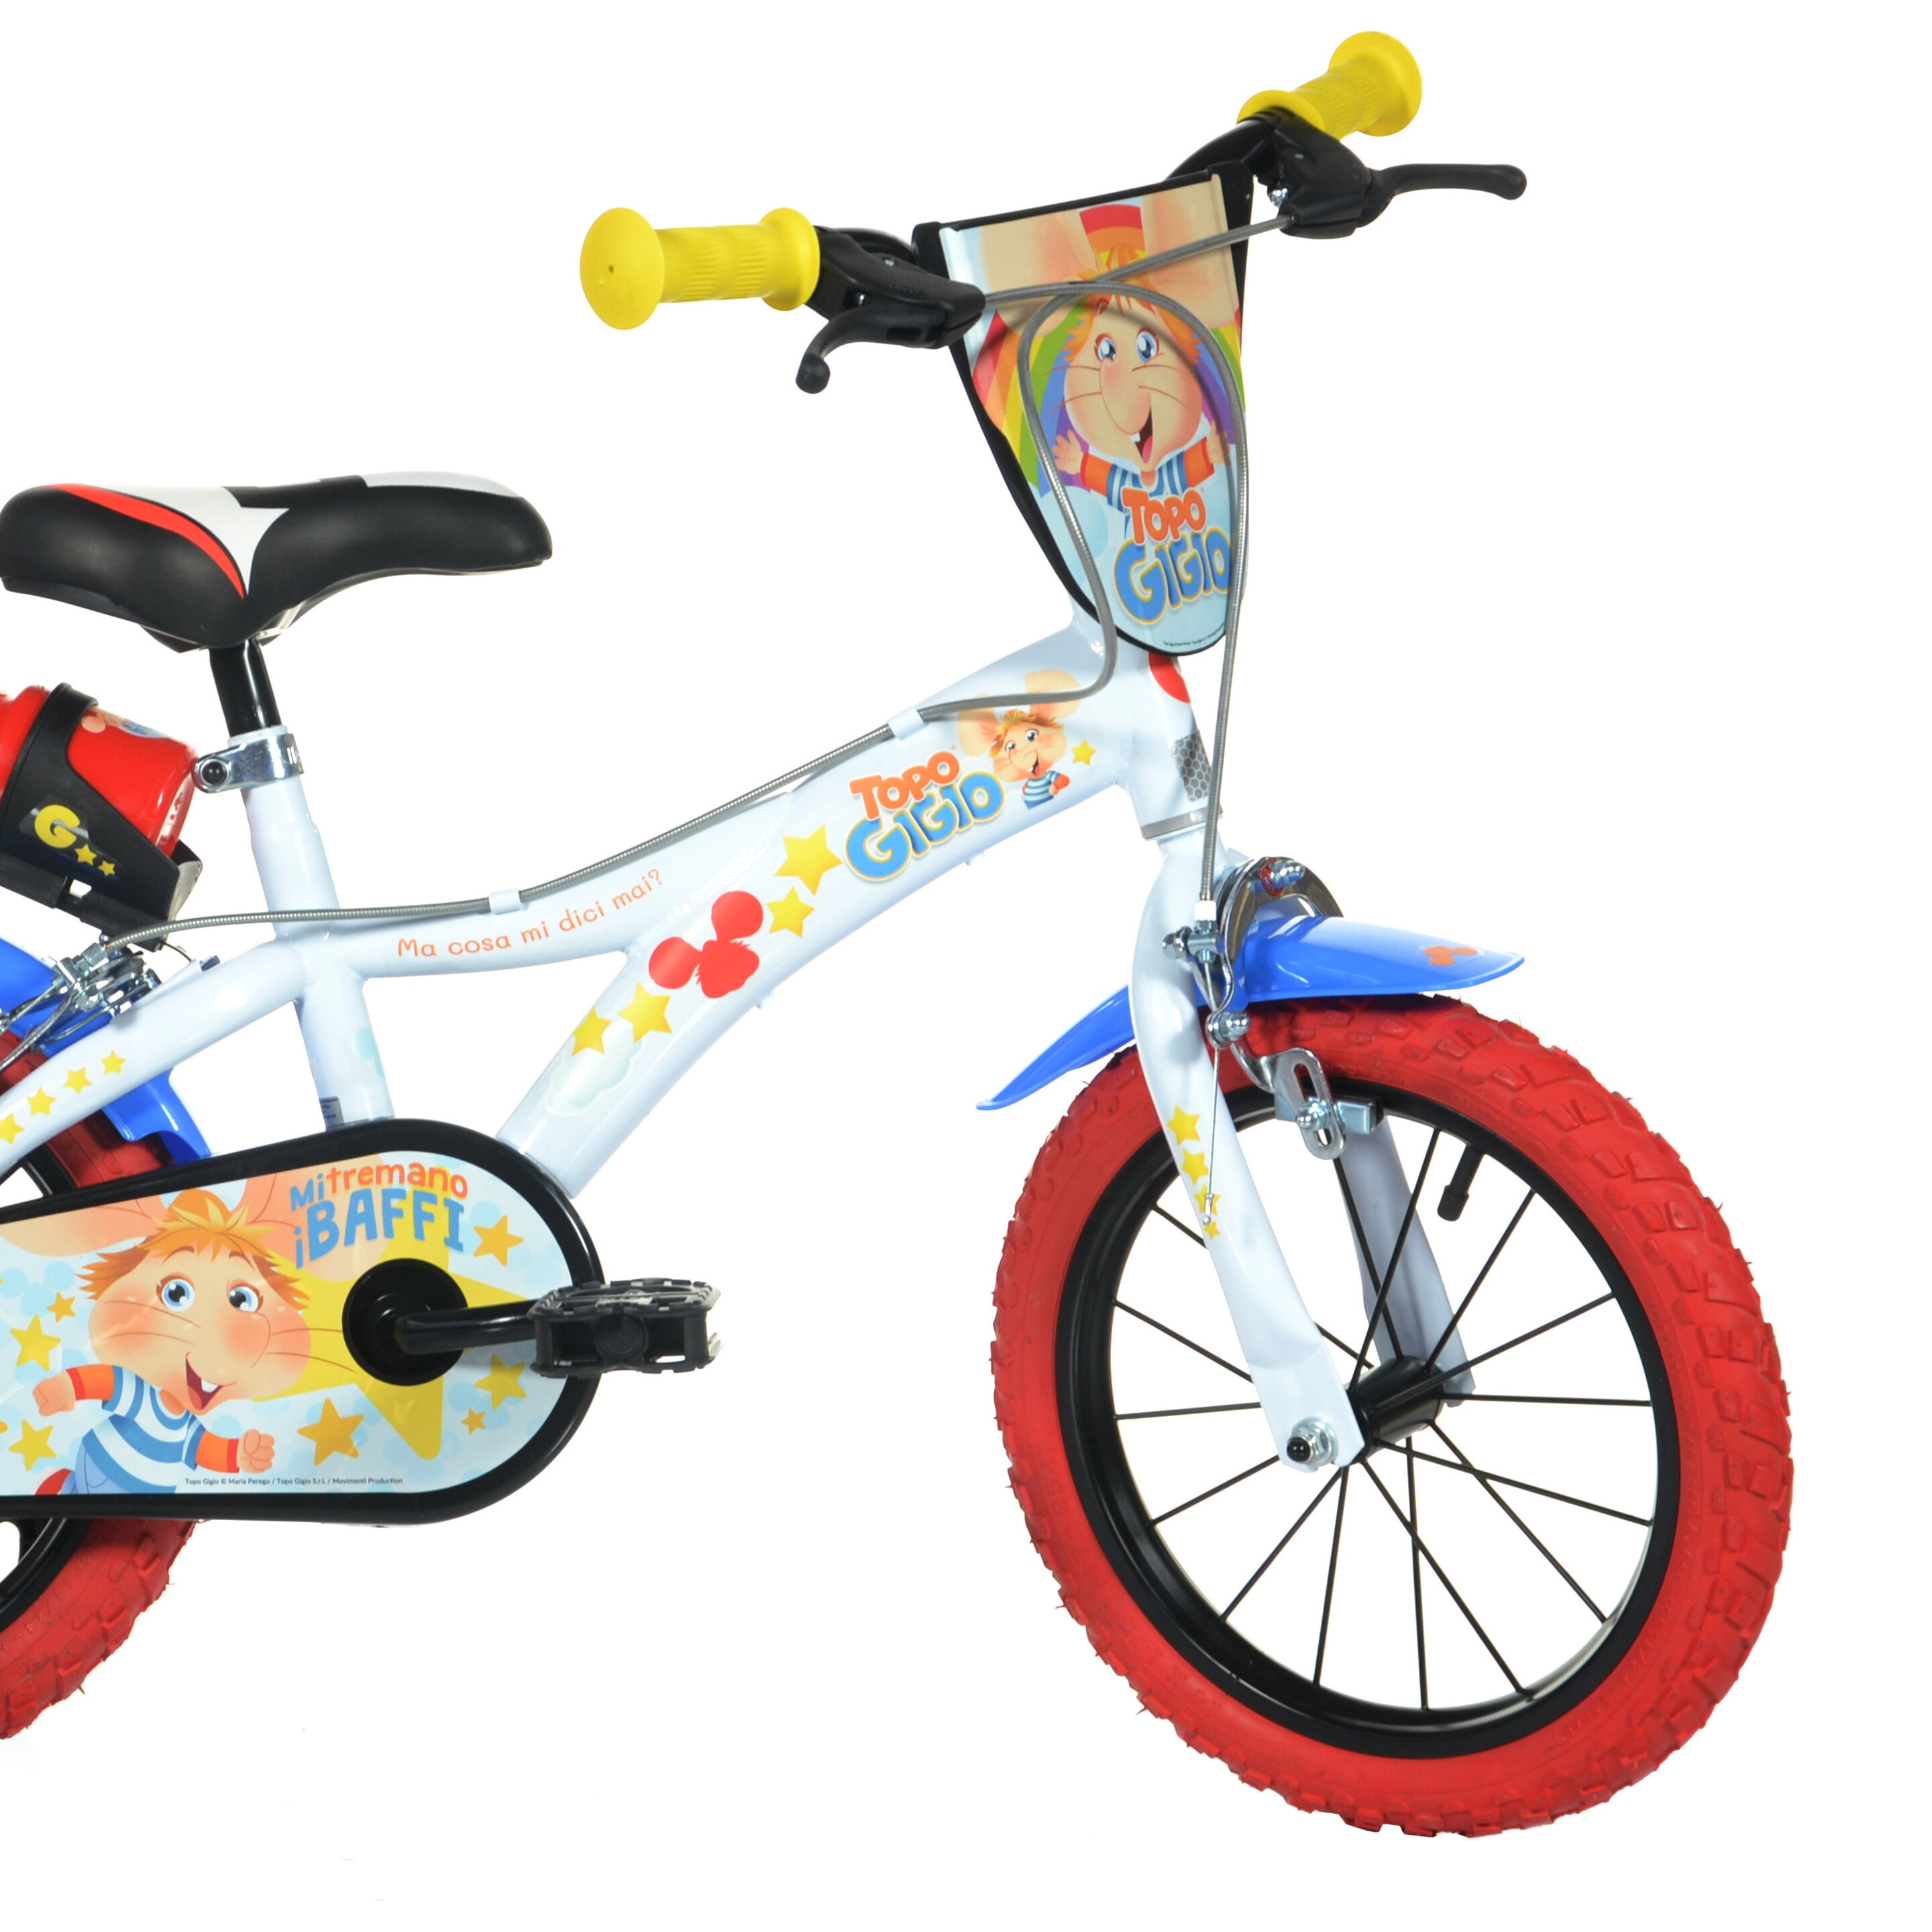 Bicicleta Infantil Topo Gigio 16 Pulgadas - Multicolor  MKP